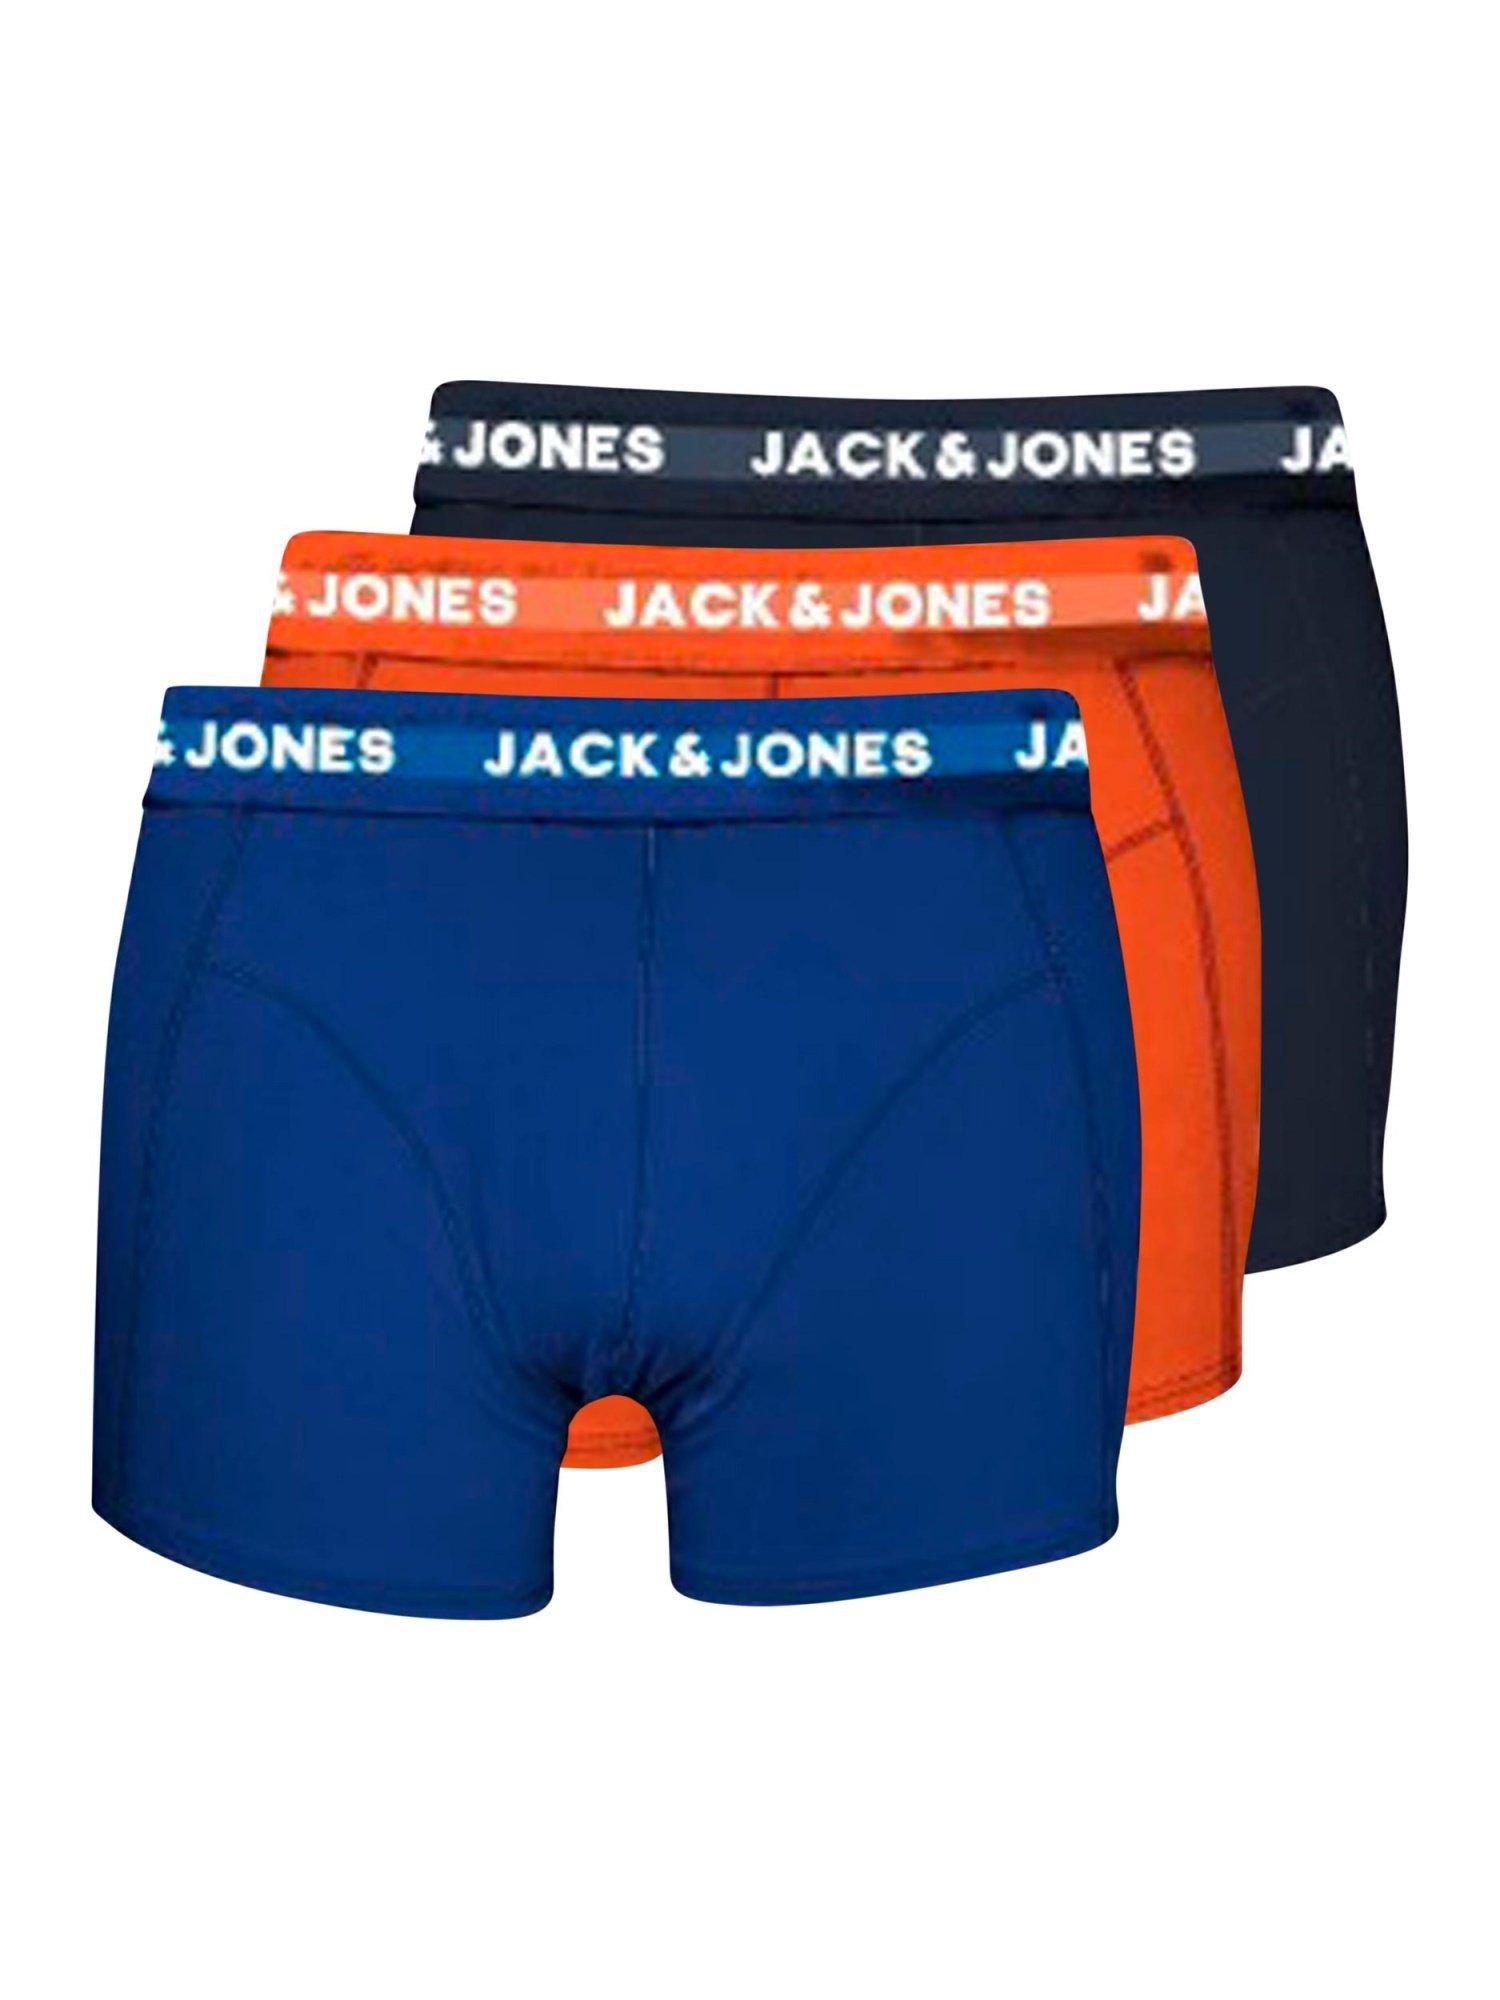 TRUNKS Pack Boxershorts Shorts Jones JACKRIS & Jack 3